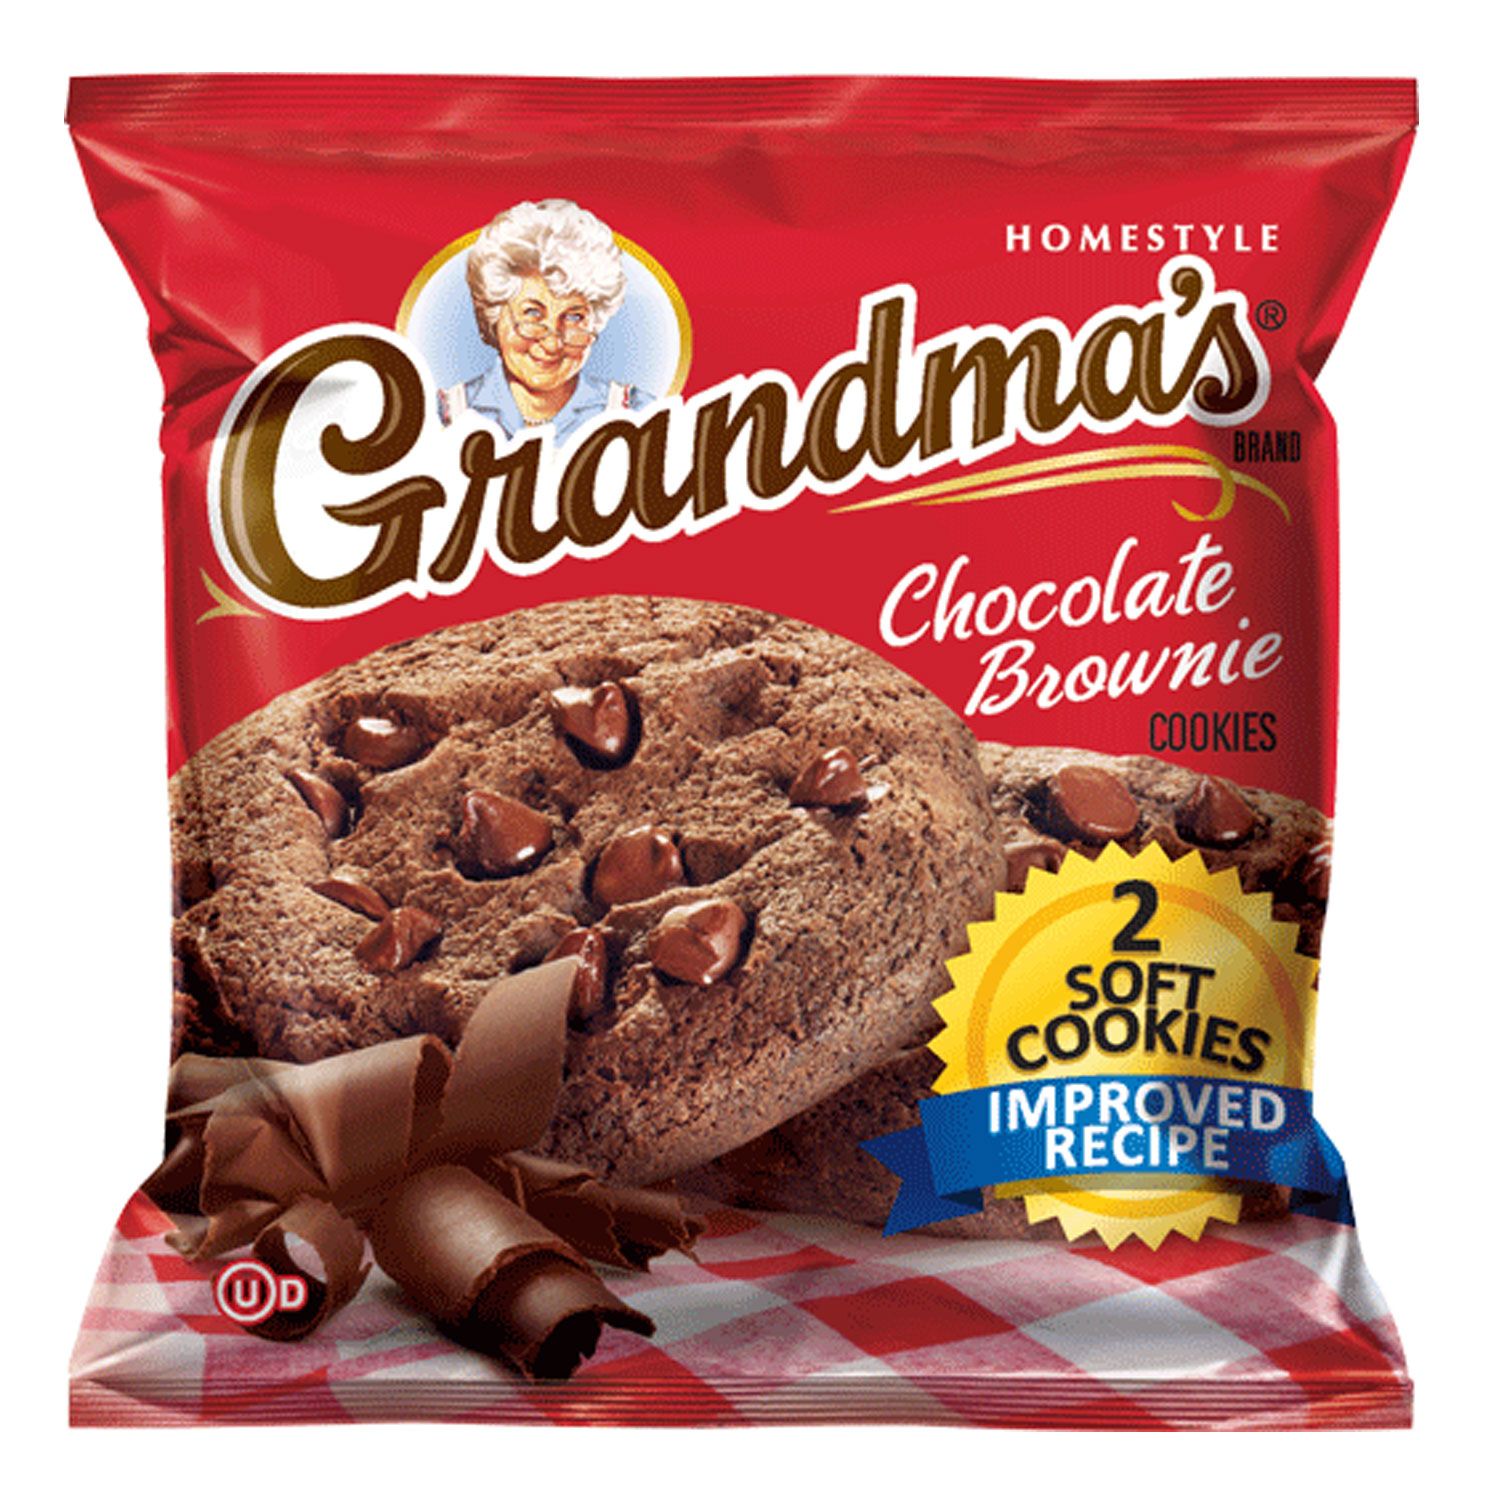 Grandma cookies. Rex шоколадный Брауни печенье. Печенье двух цветов. Cookie Fudge Nuggets. Печенье grandmas Chocolate Chip 70.8 g America.